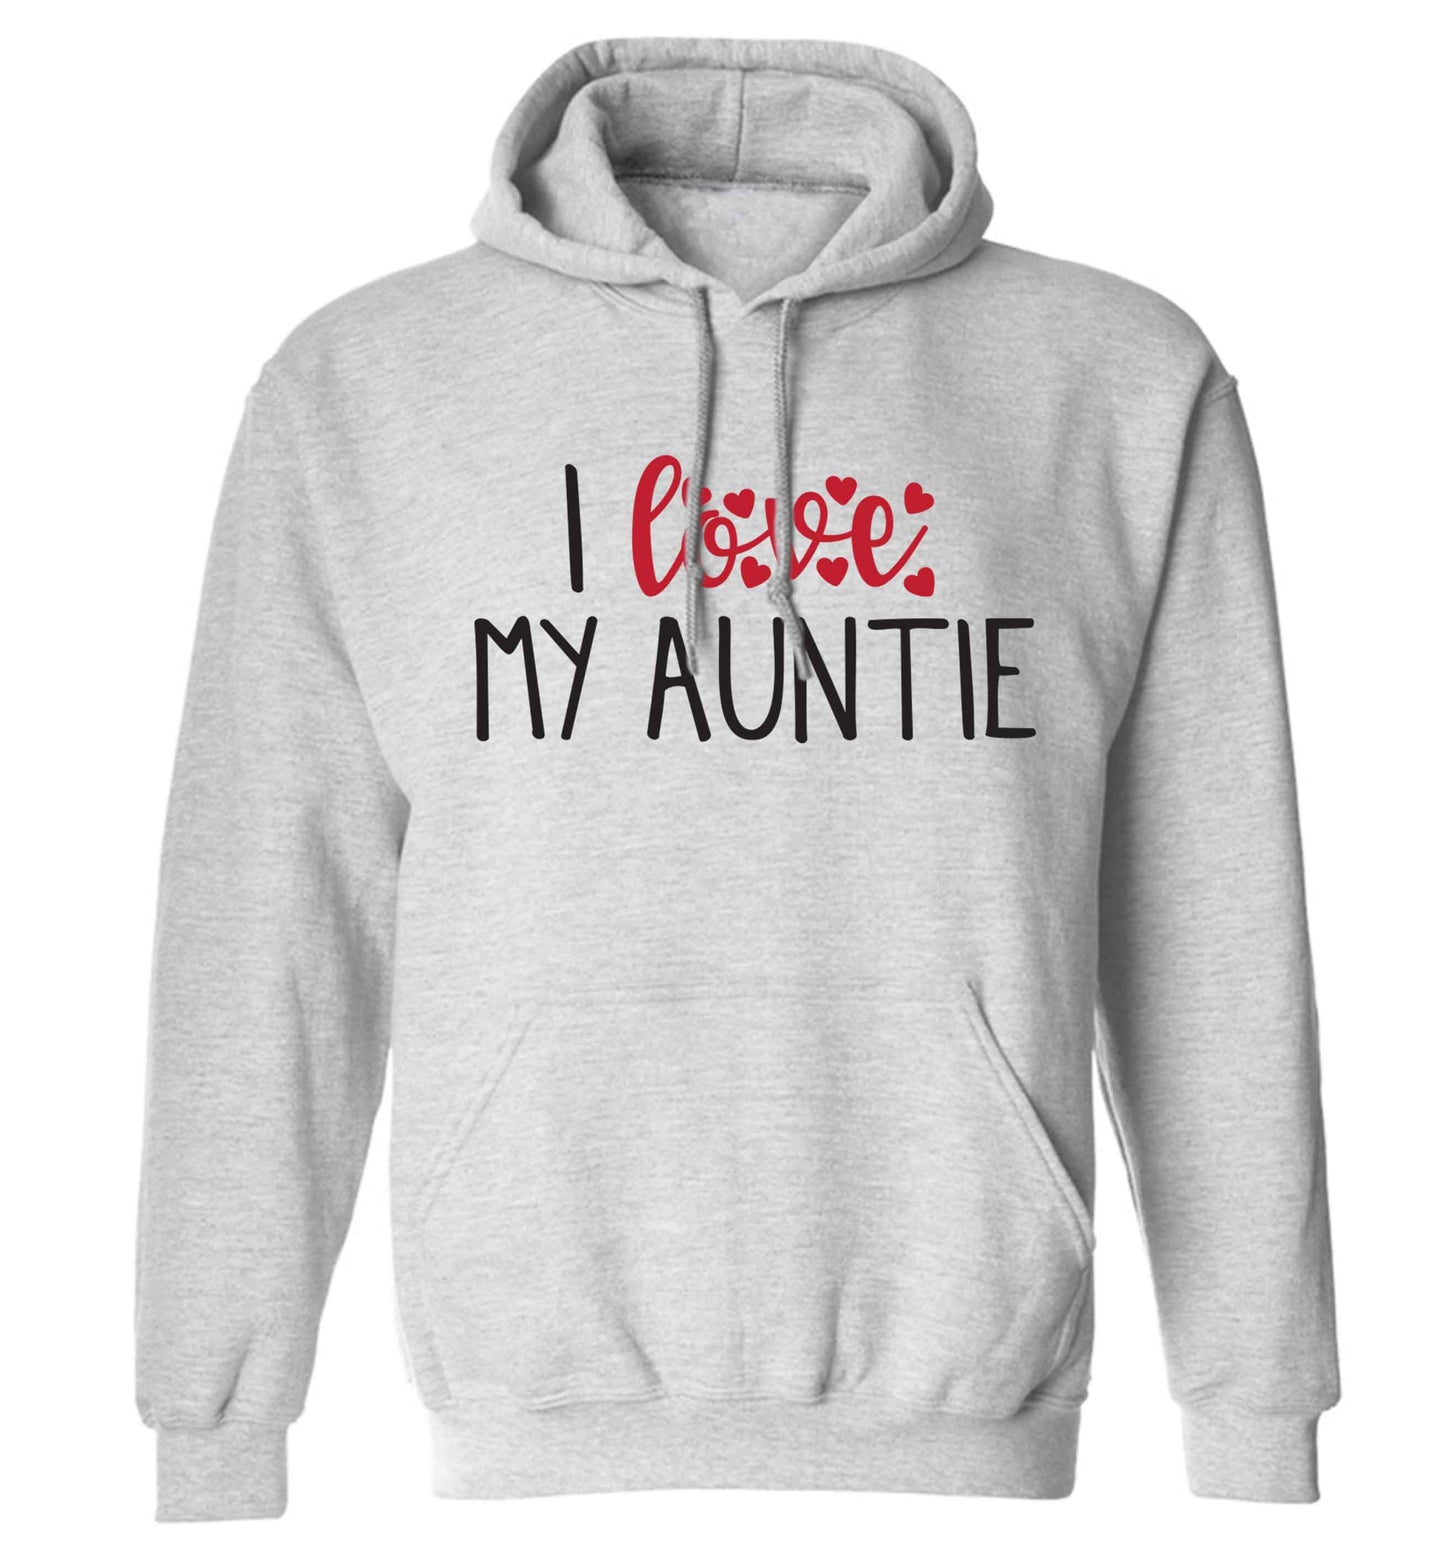 I love my auntie adults unisex grey hoodie 2XL